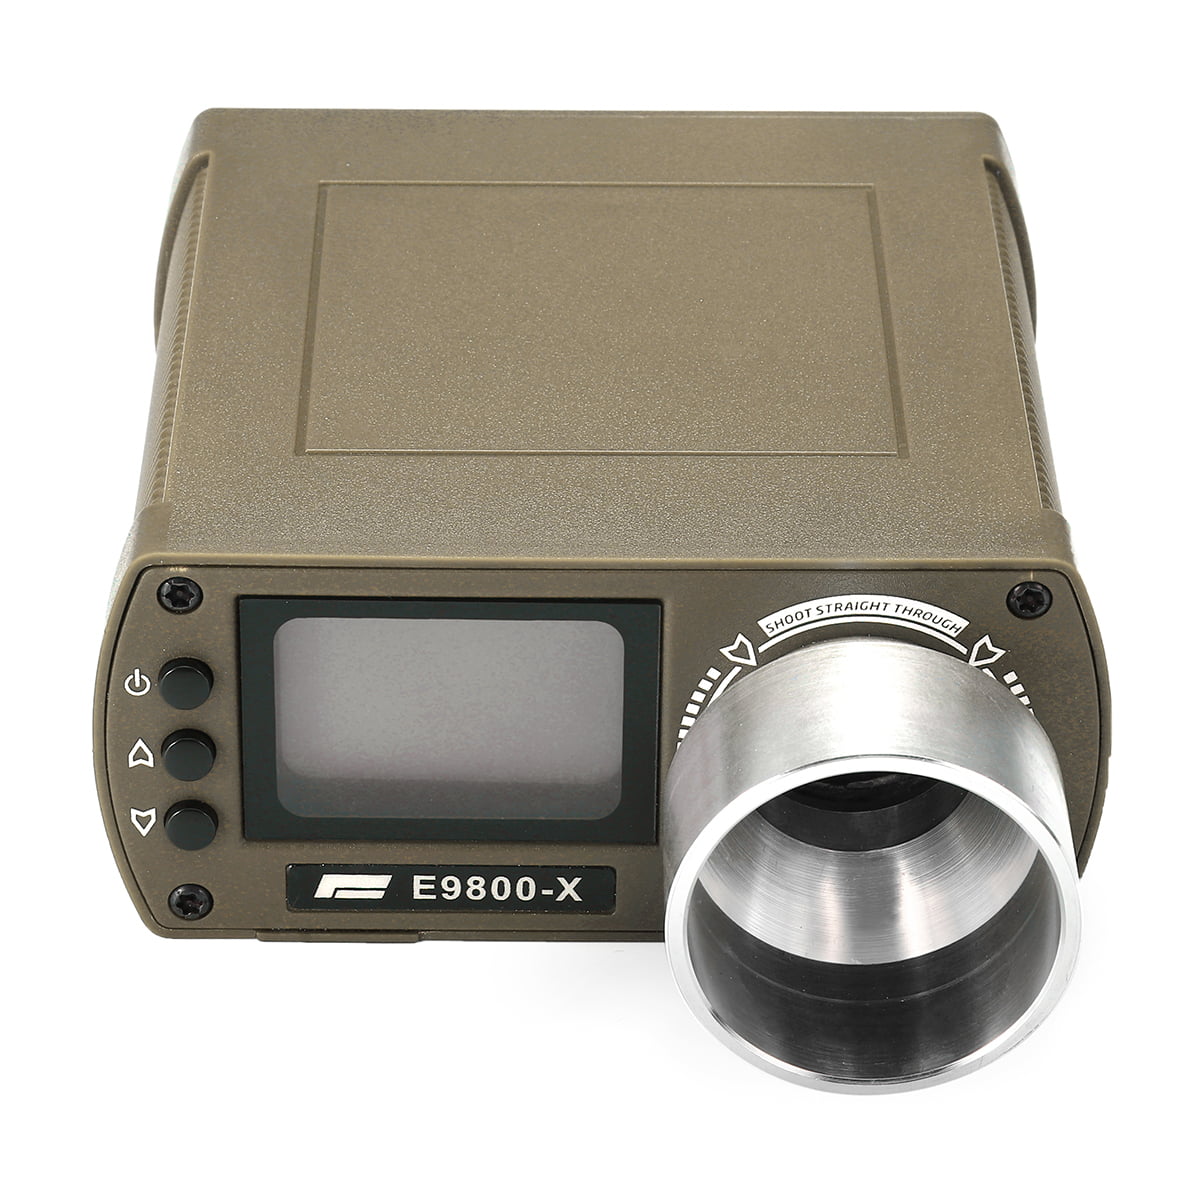 E9800-X Shooting Chronograph Speed Tester Chrono Airsoft BB Hunting Tool BU 